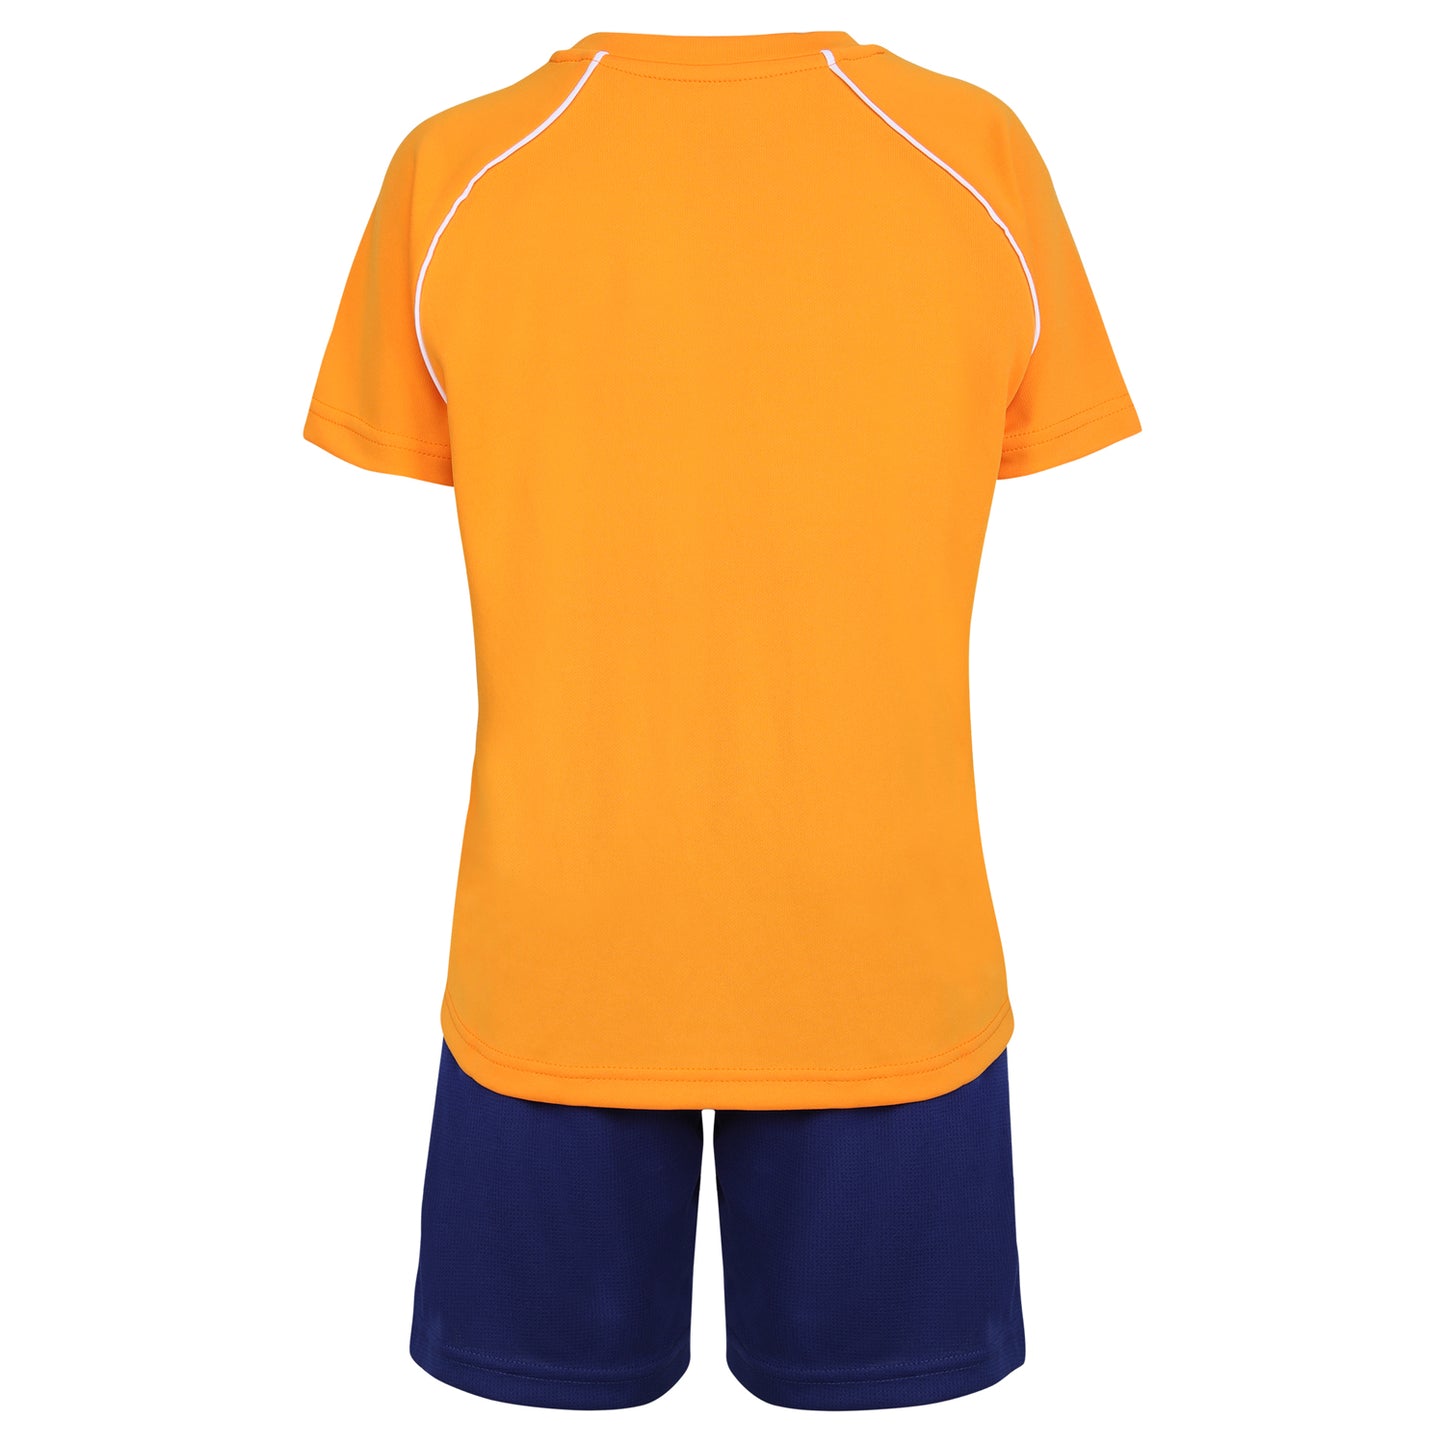 Yonex 1594 Round Neck T-Shirt and Short set for Junior, Bright MariGold - Best Price online Prokicksports.com